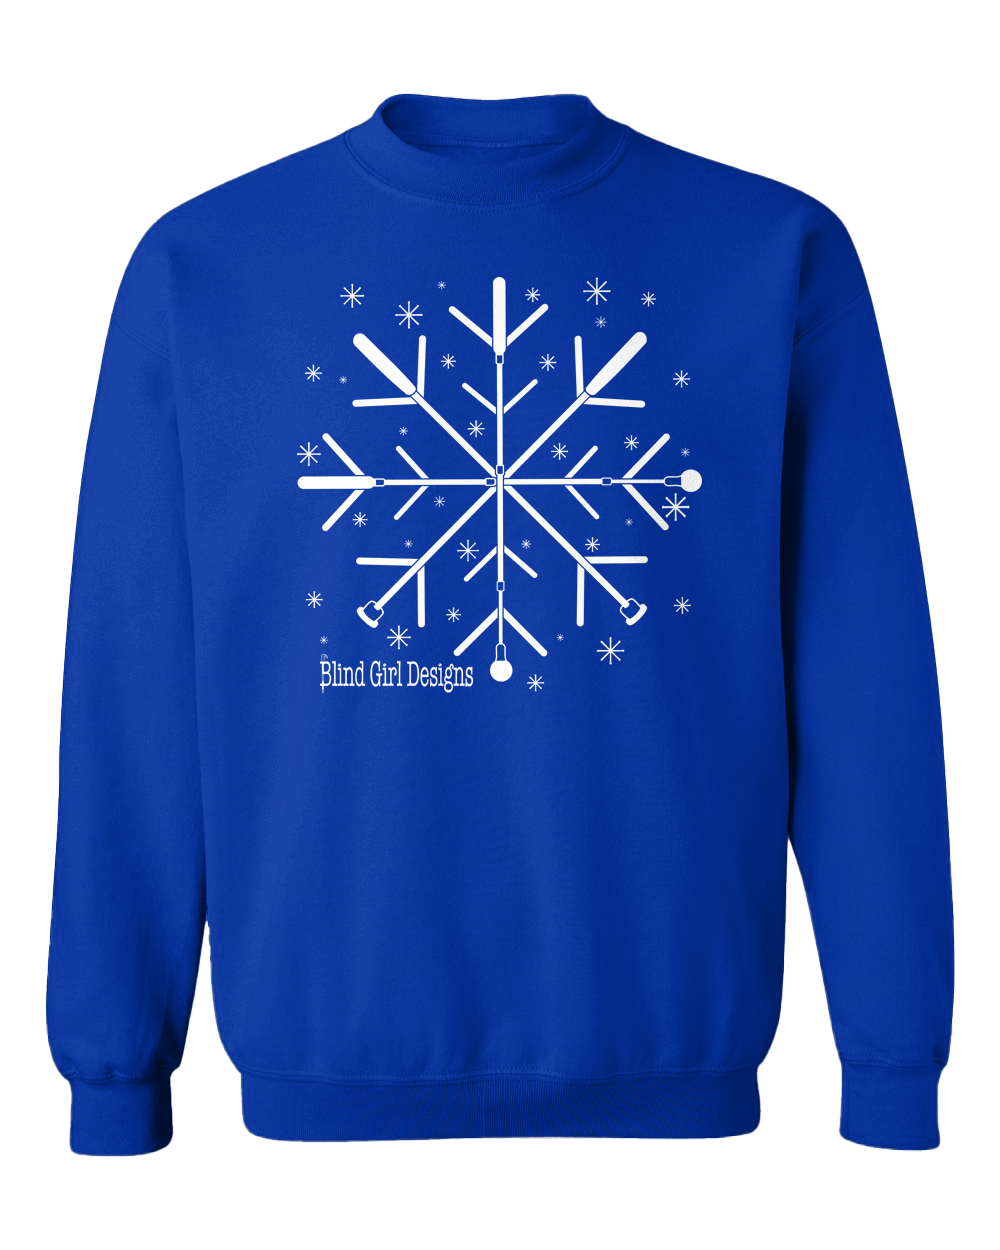 New 3D Super Tactile Snowflake White Cane Crew Sweatshirt - Royal blue